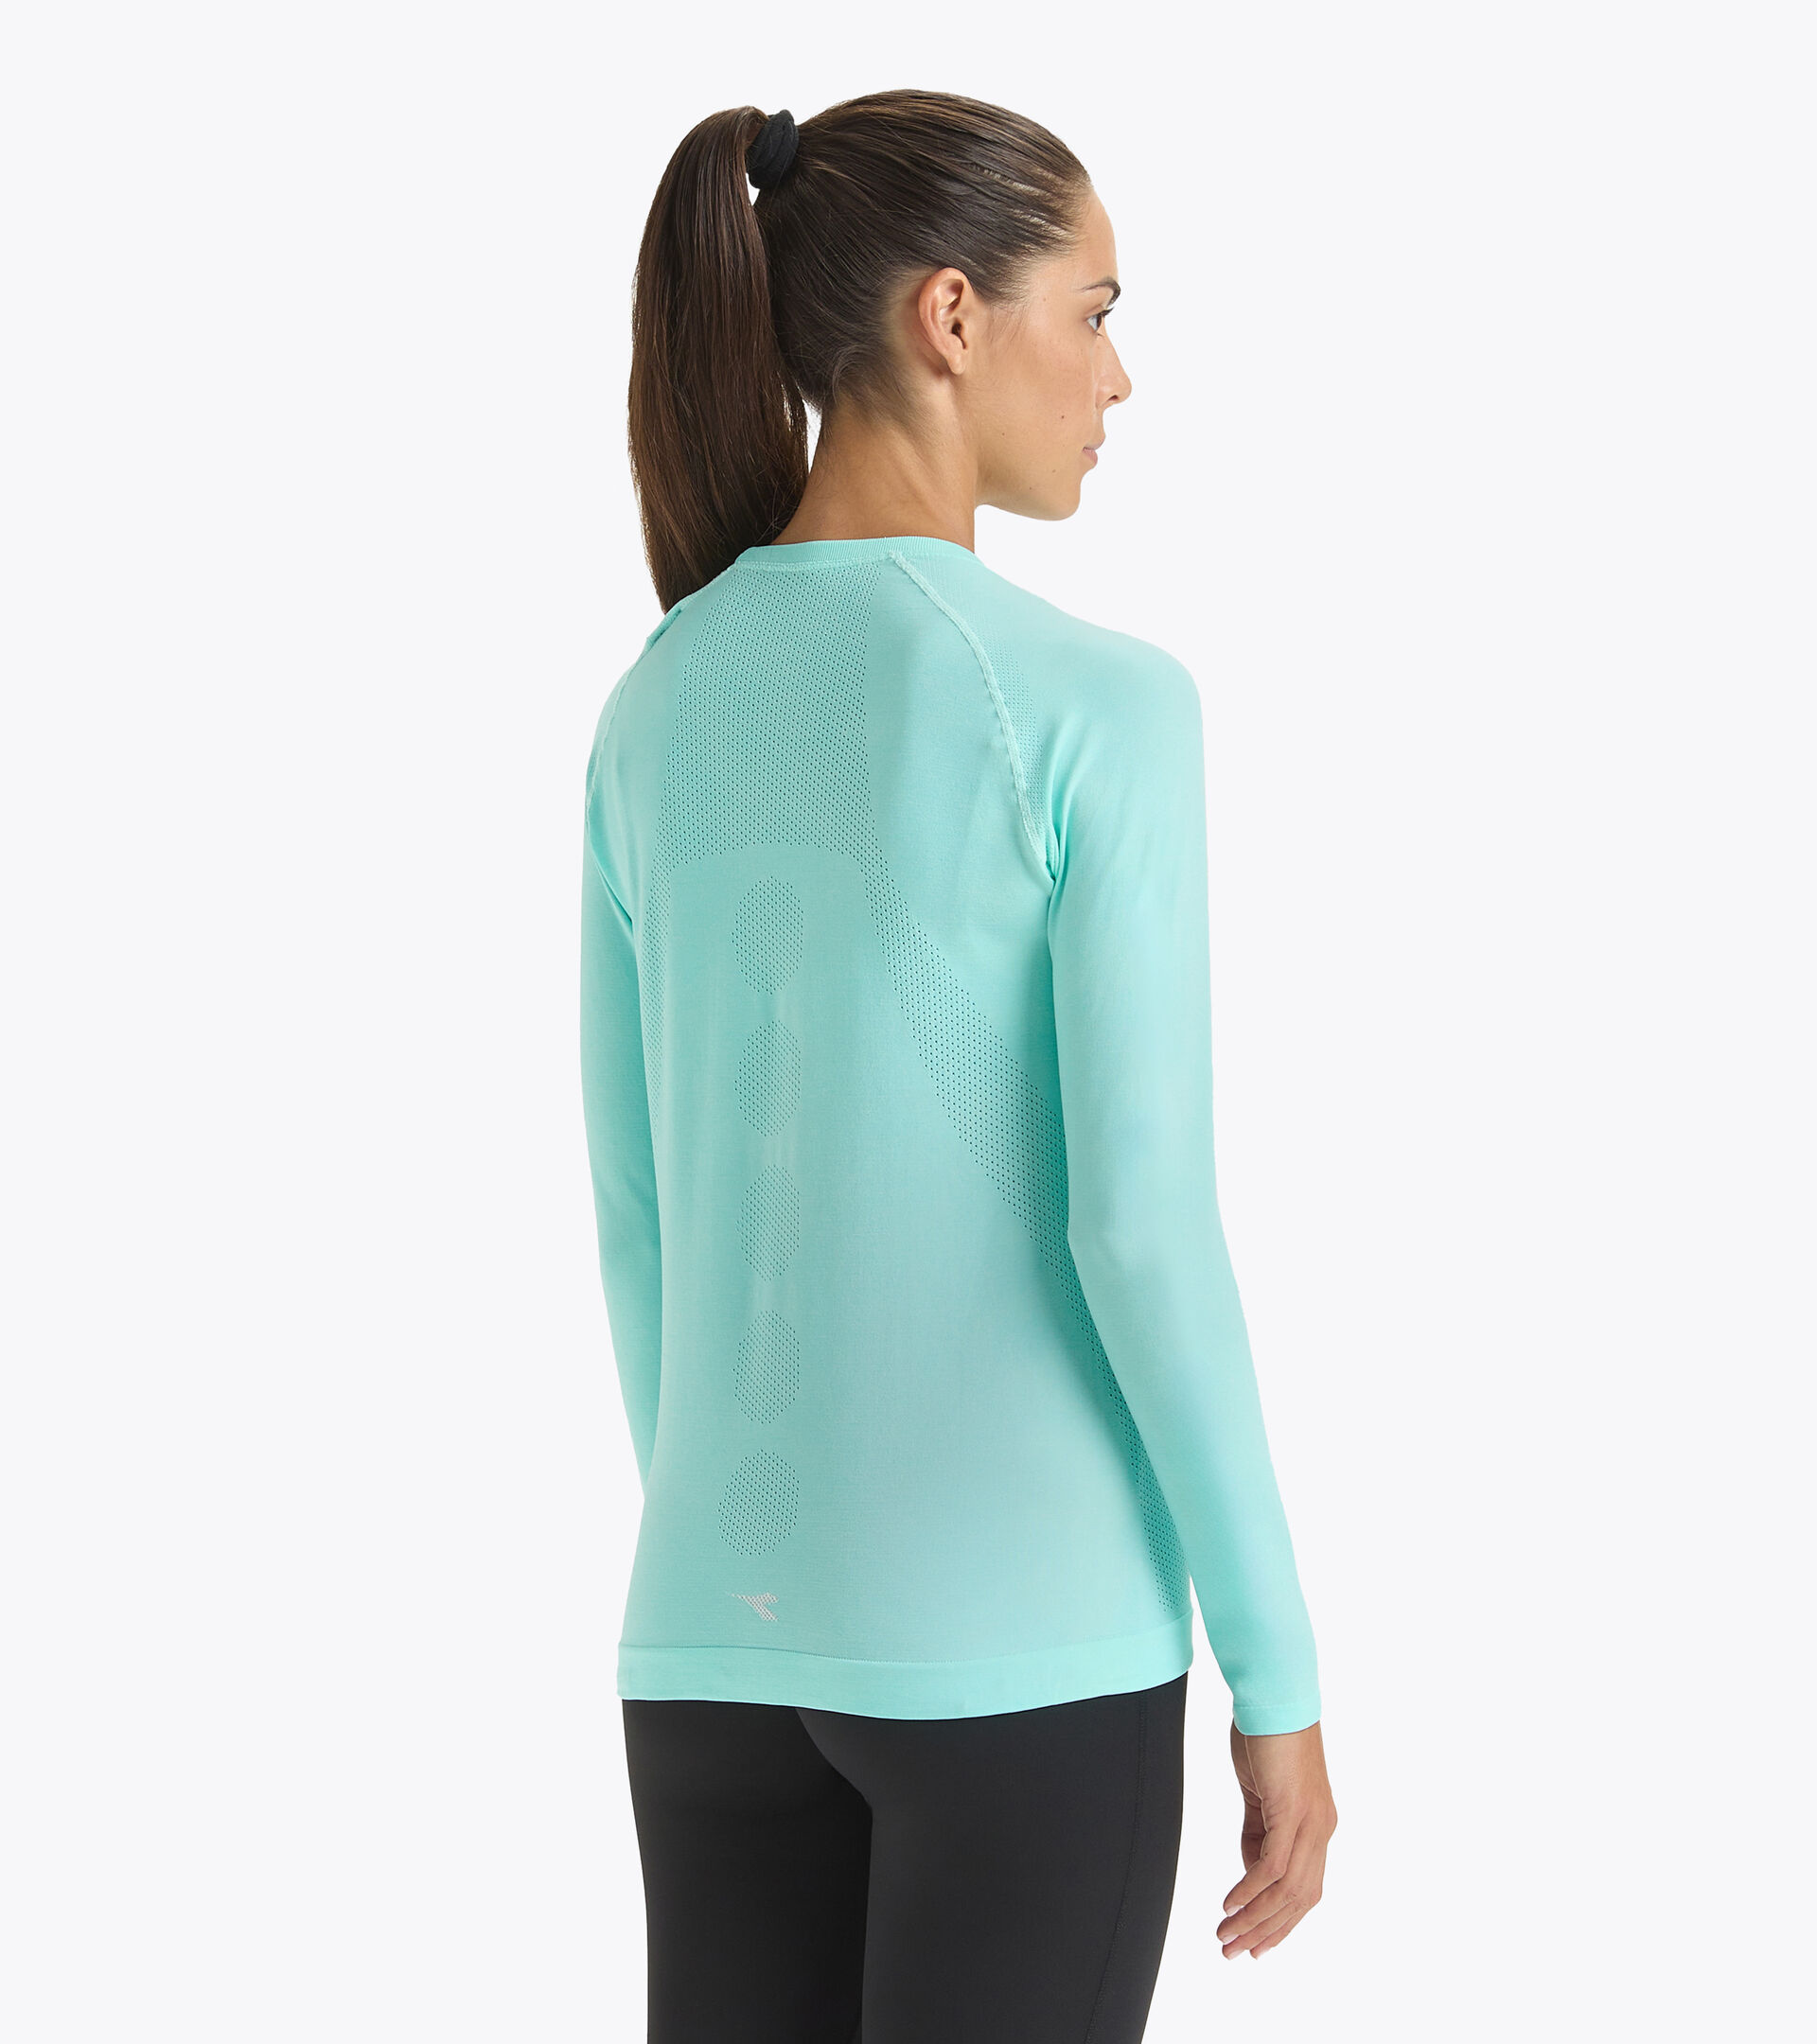 Gymshark Vital Seamless Shirt Size Large Women's Short Sleeve Athletic Top